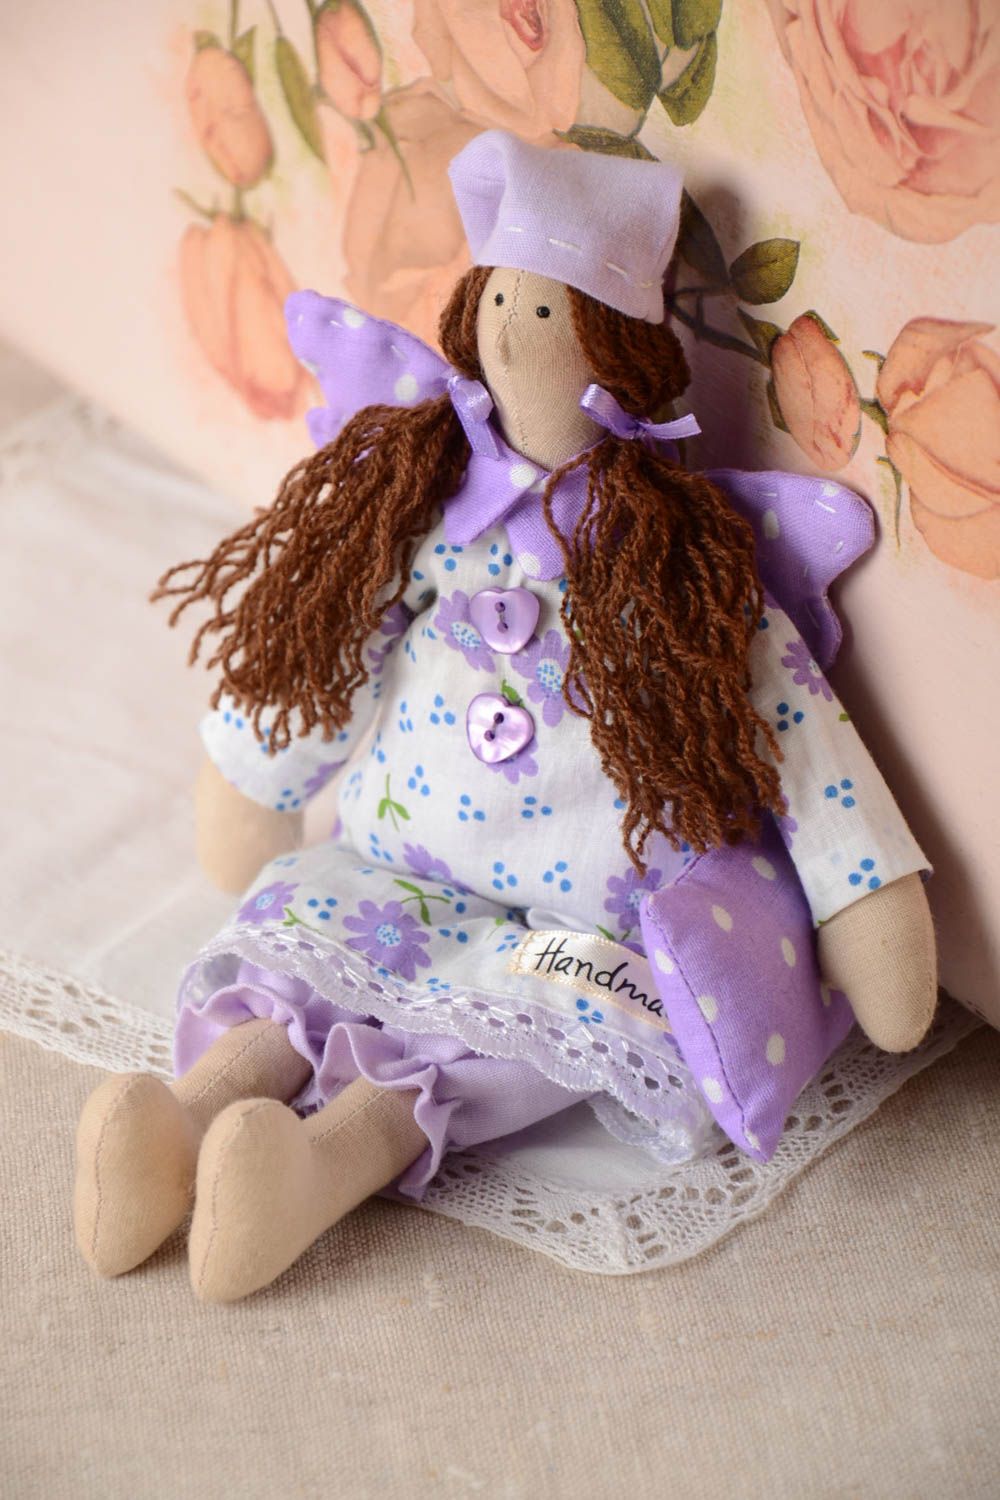 Beautiful handmade rag doll soft toy designs interior design ideas gift ideas photo 1